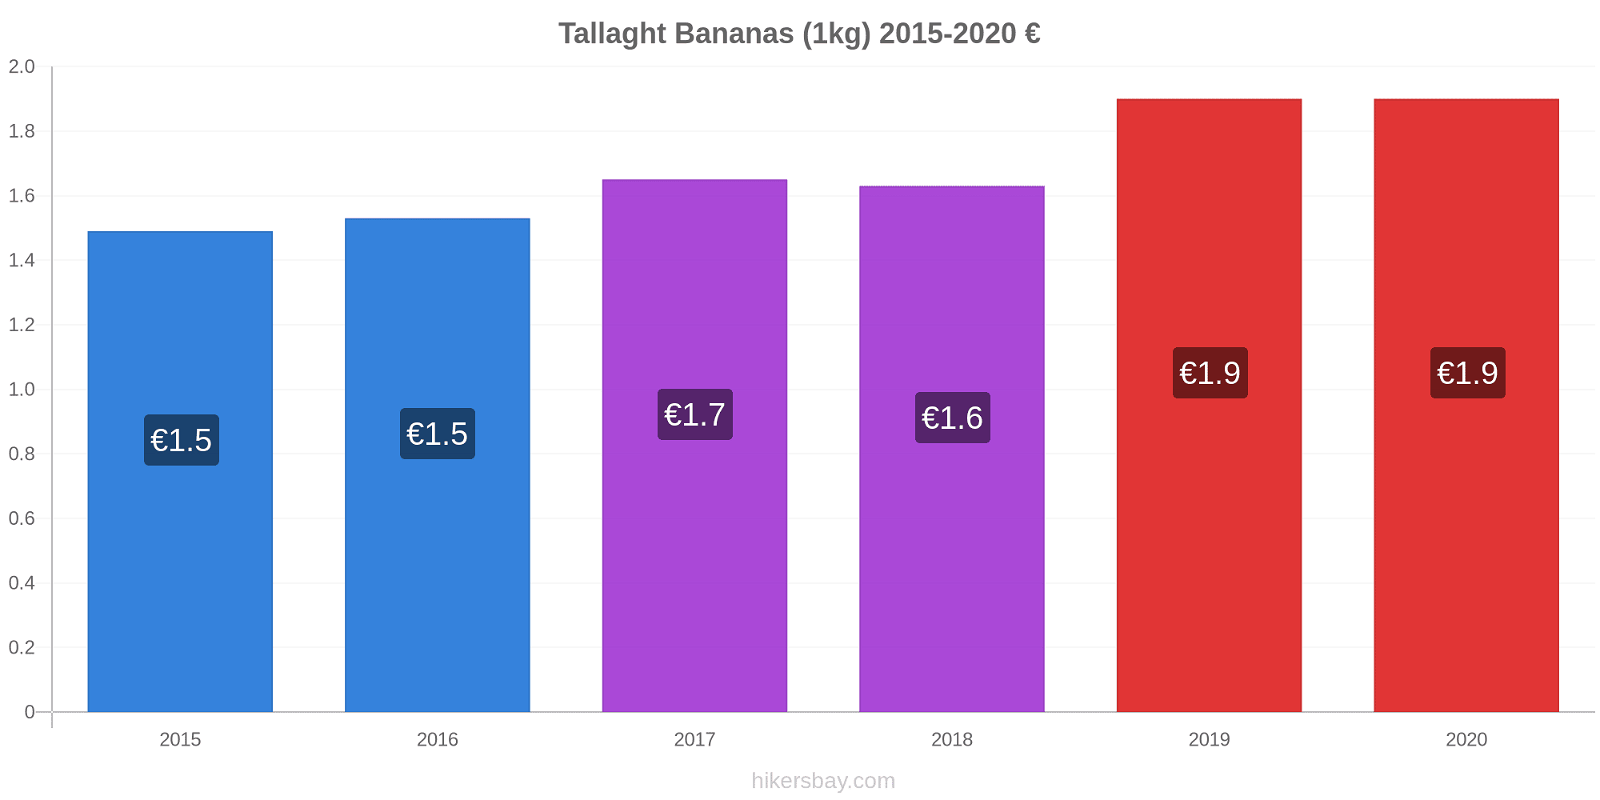 Tallaght price changes Bananas (1kg) hikersbay.com